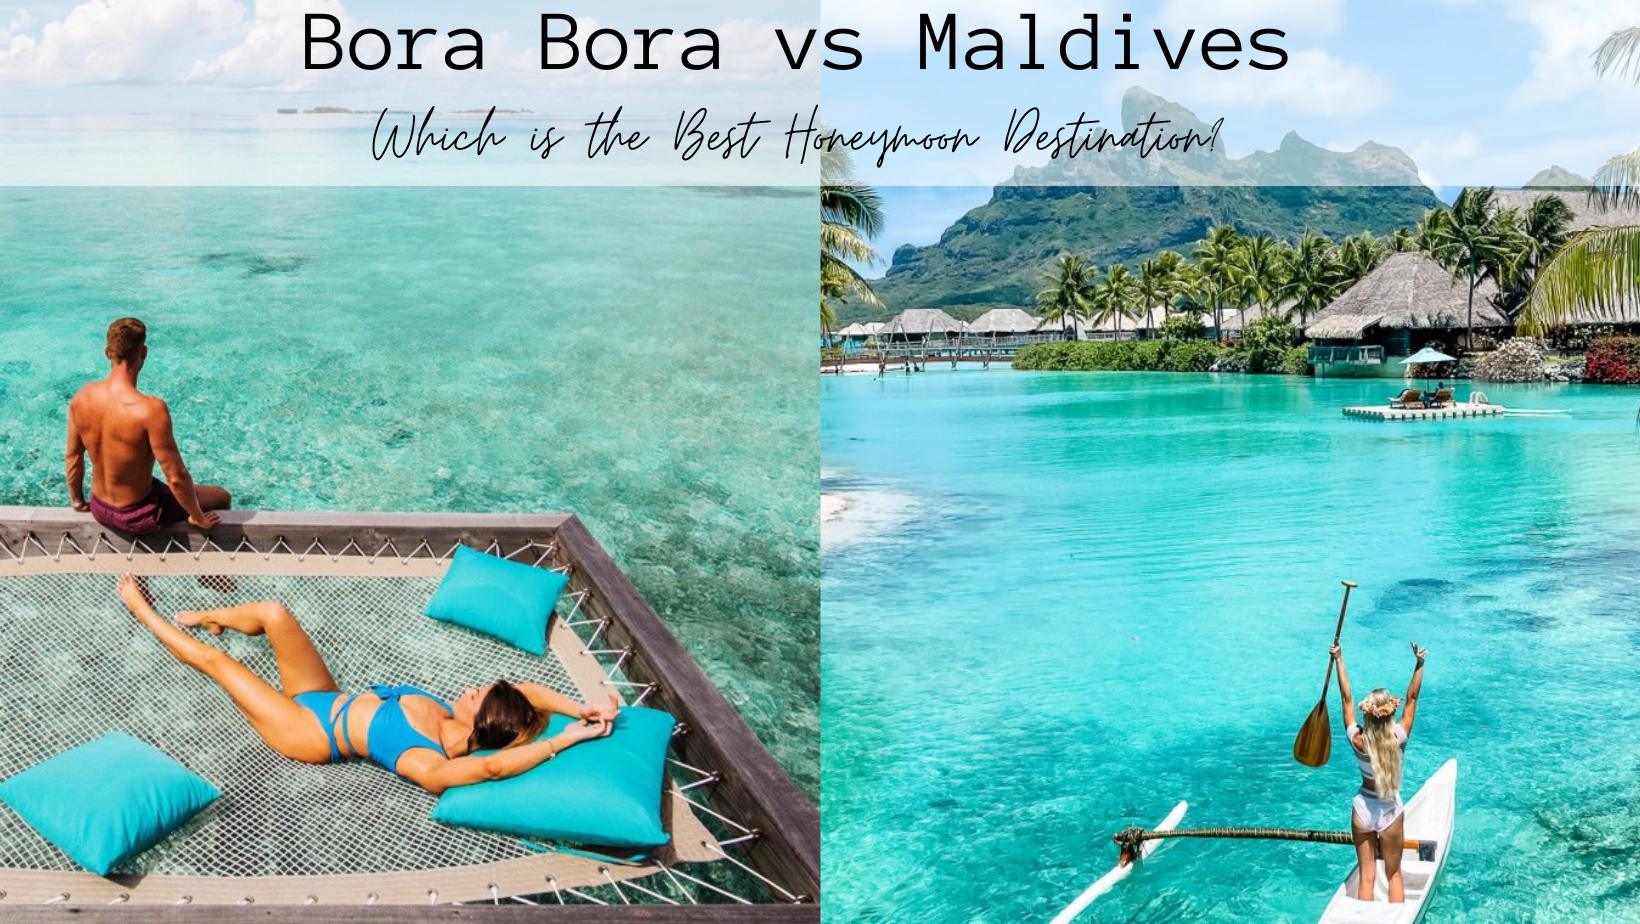 Bora Bora or the Maldives: Which is the Best Honeymoon Destination